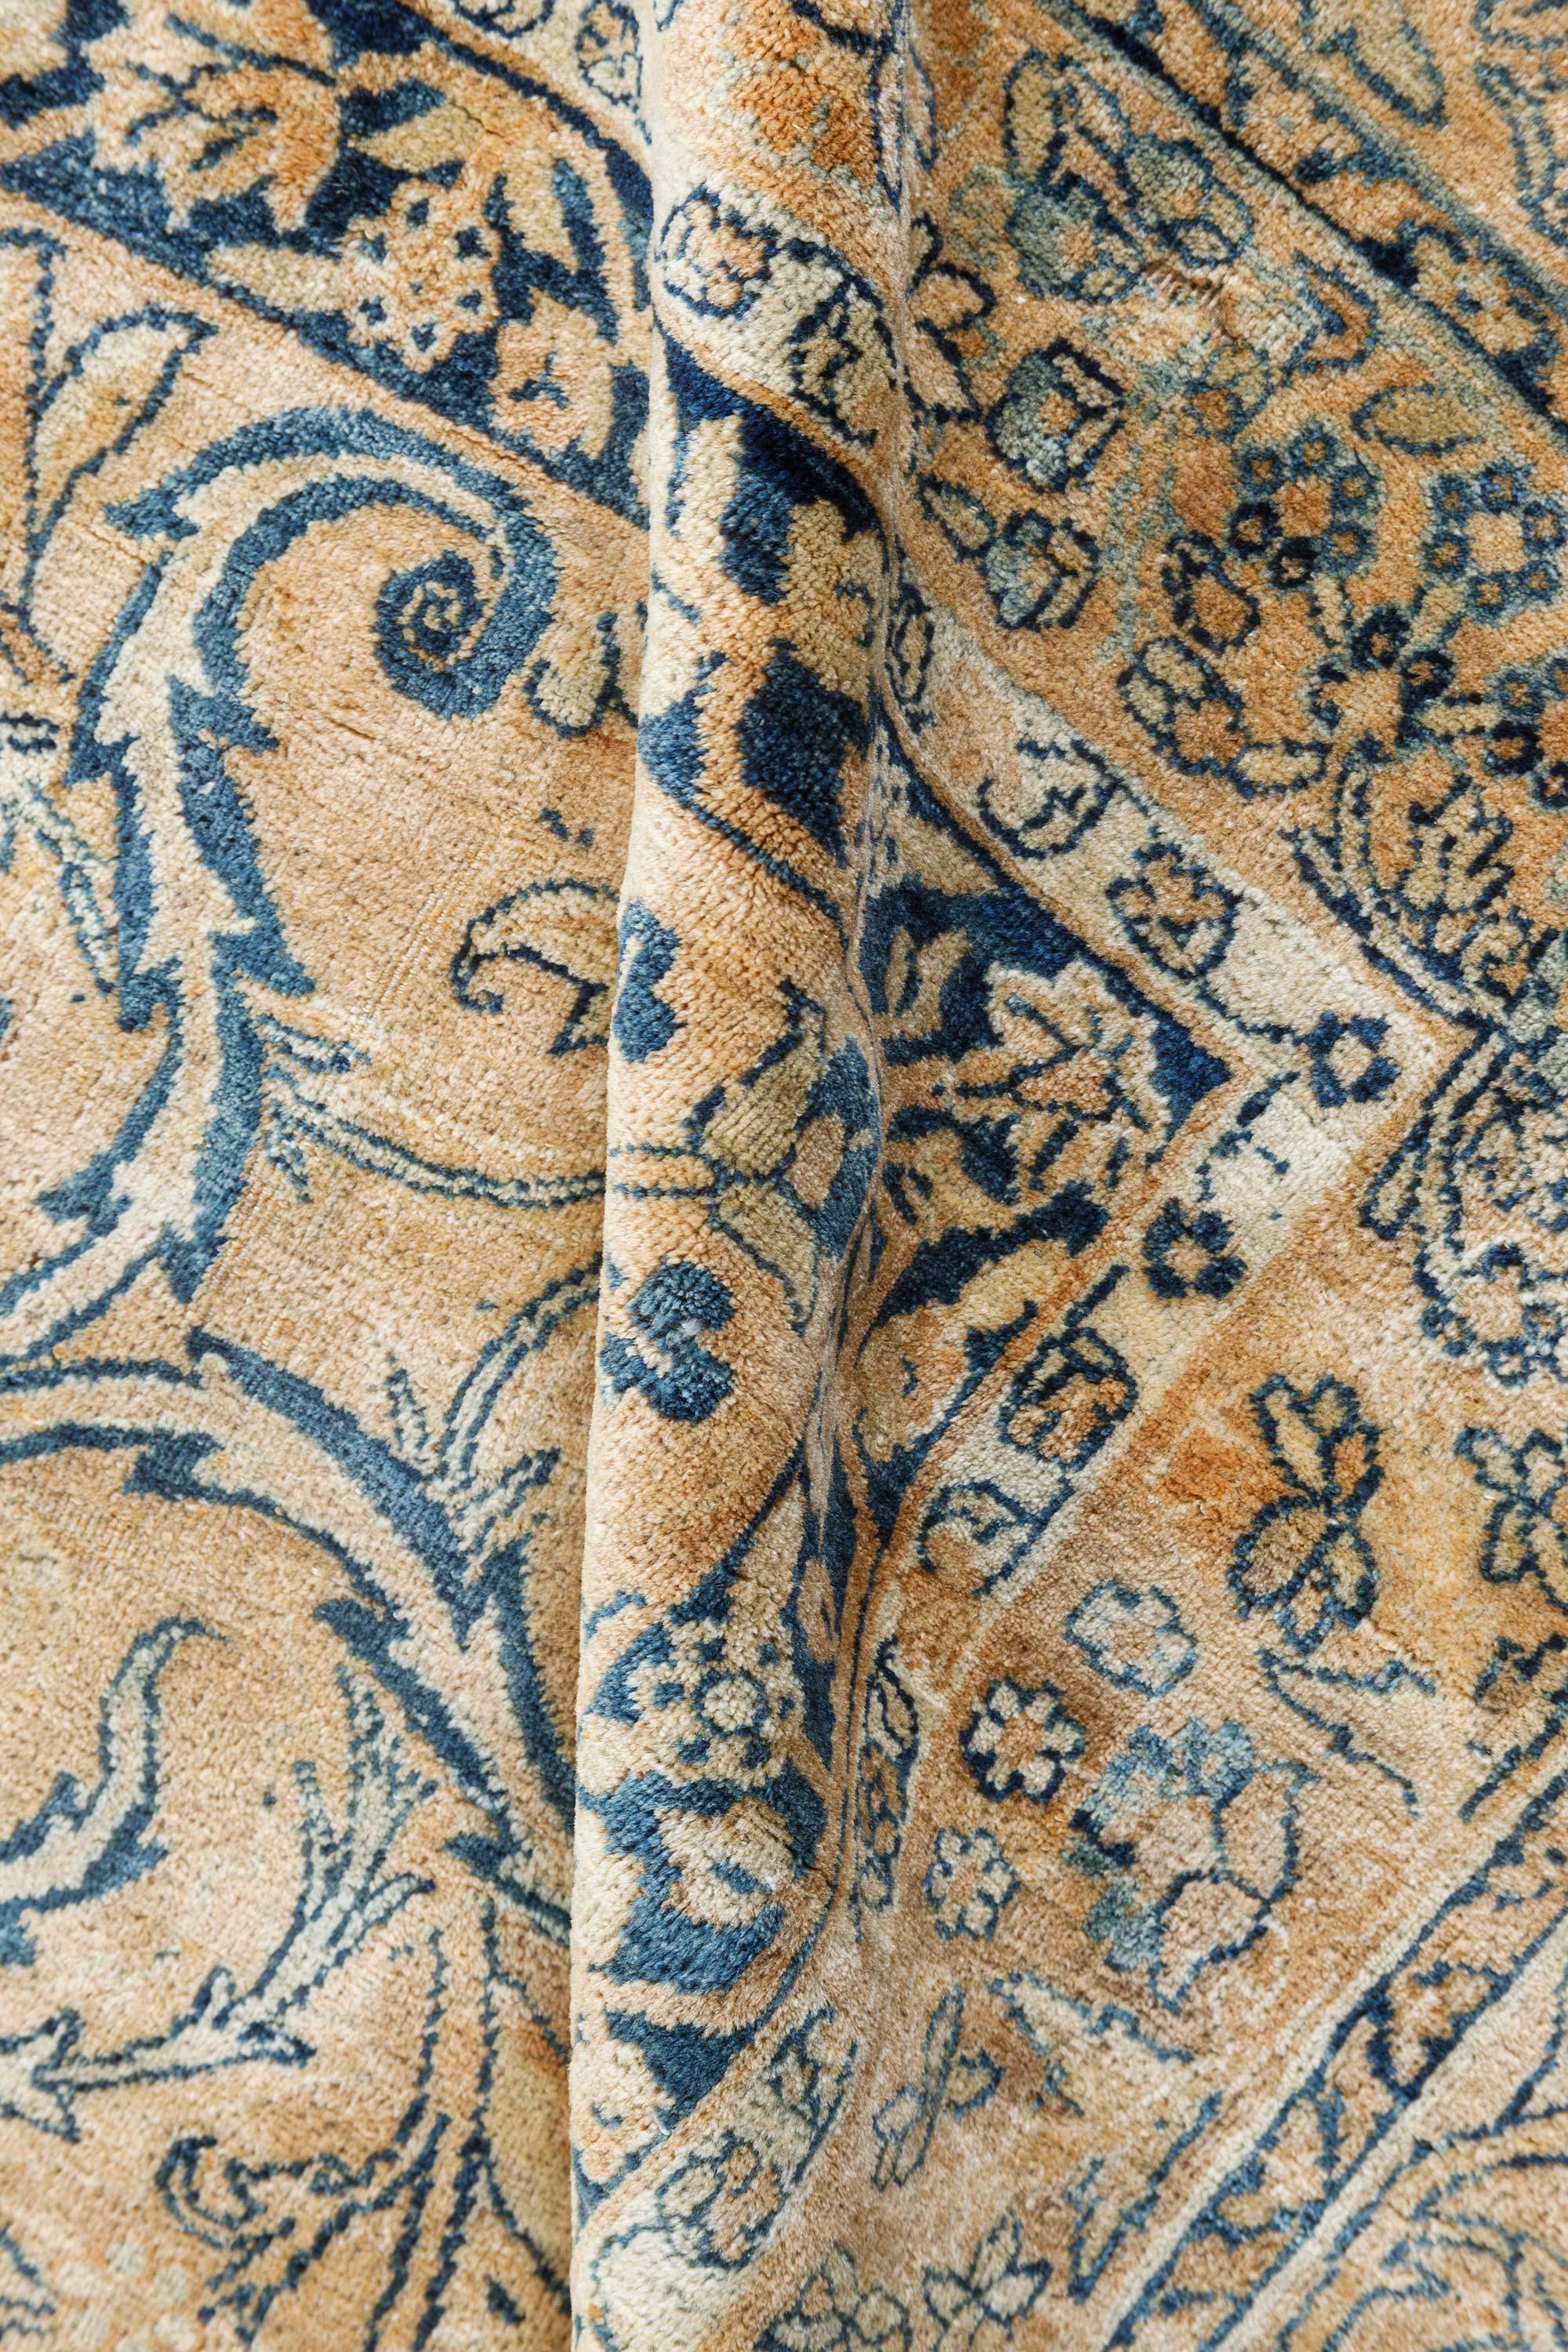 Authentic Persian Kirman handmade wool rug.
Size: 13'6